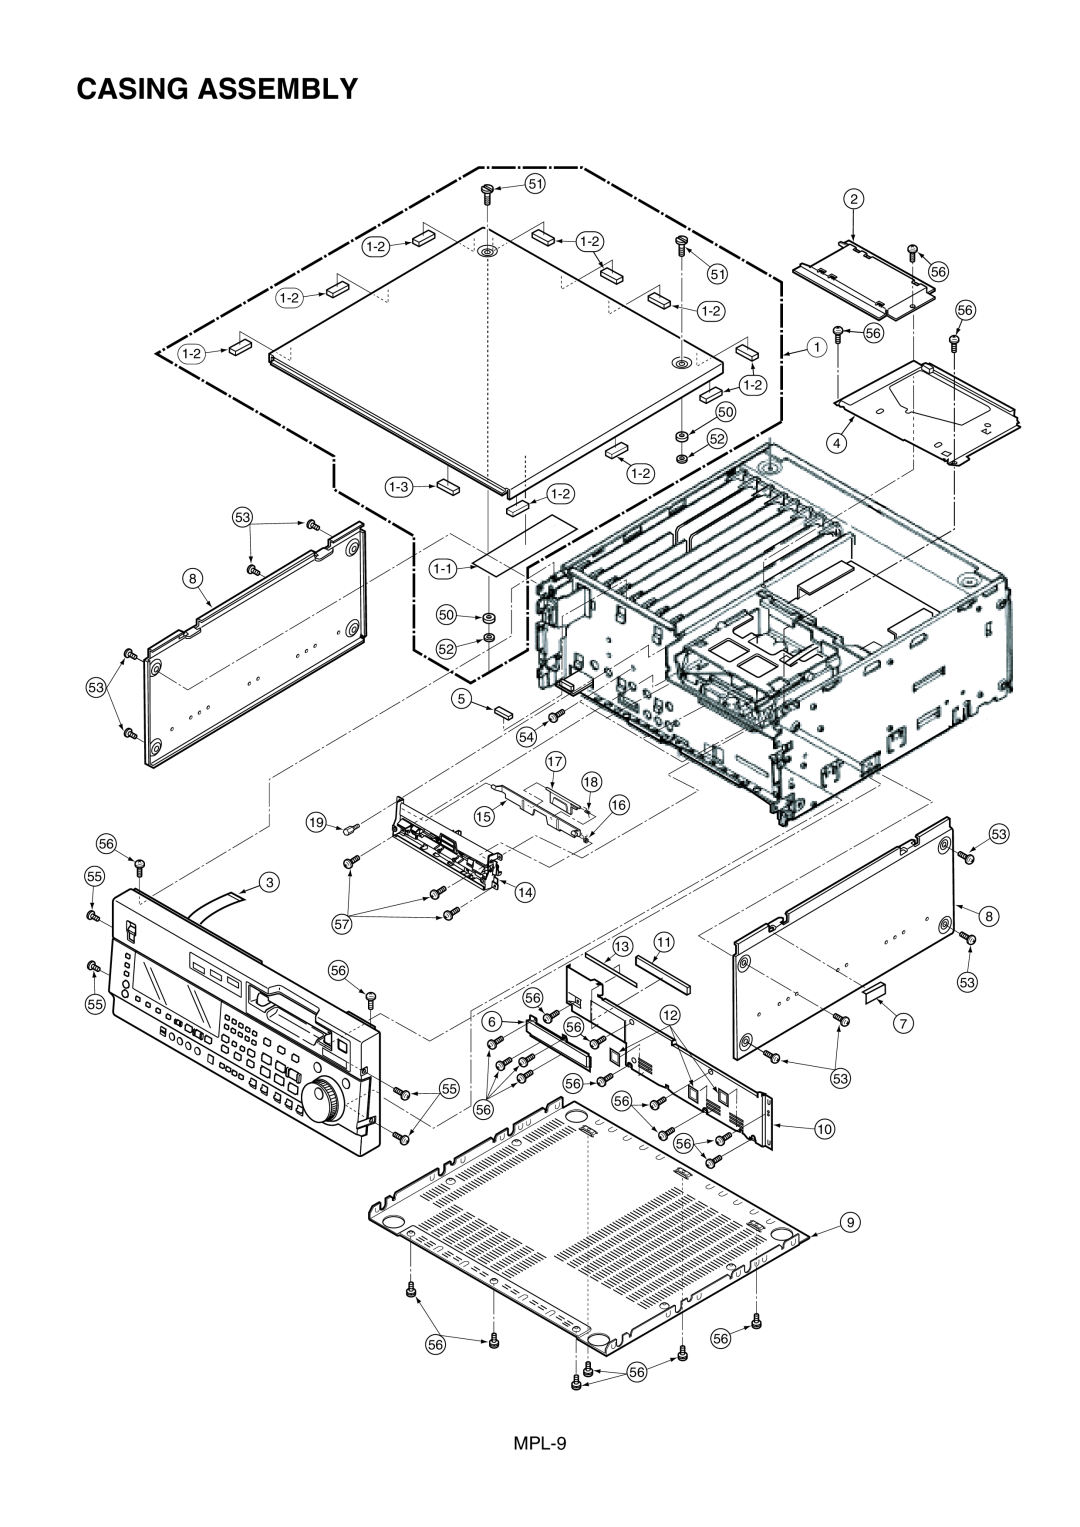 Panasonic AJ-SD965E, AJ-D965MC, AJ-SD945E, AJ-YAC965E manual Casing Assembly, MPL-9 